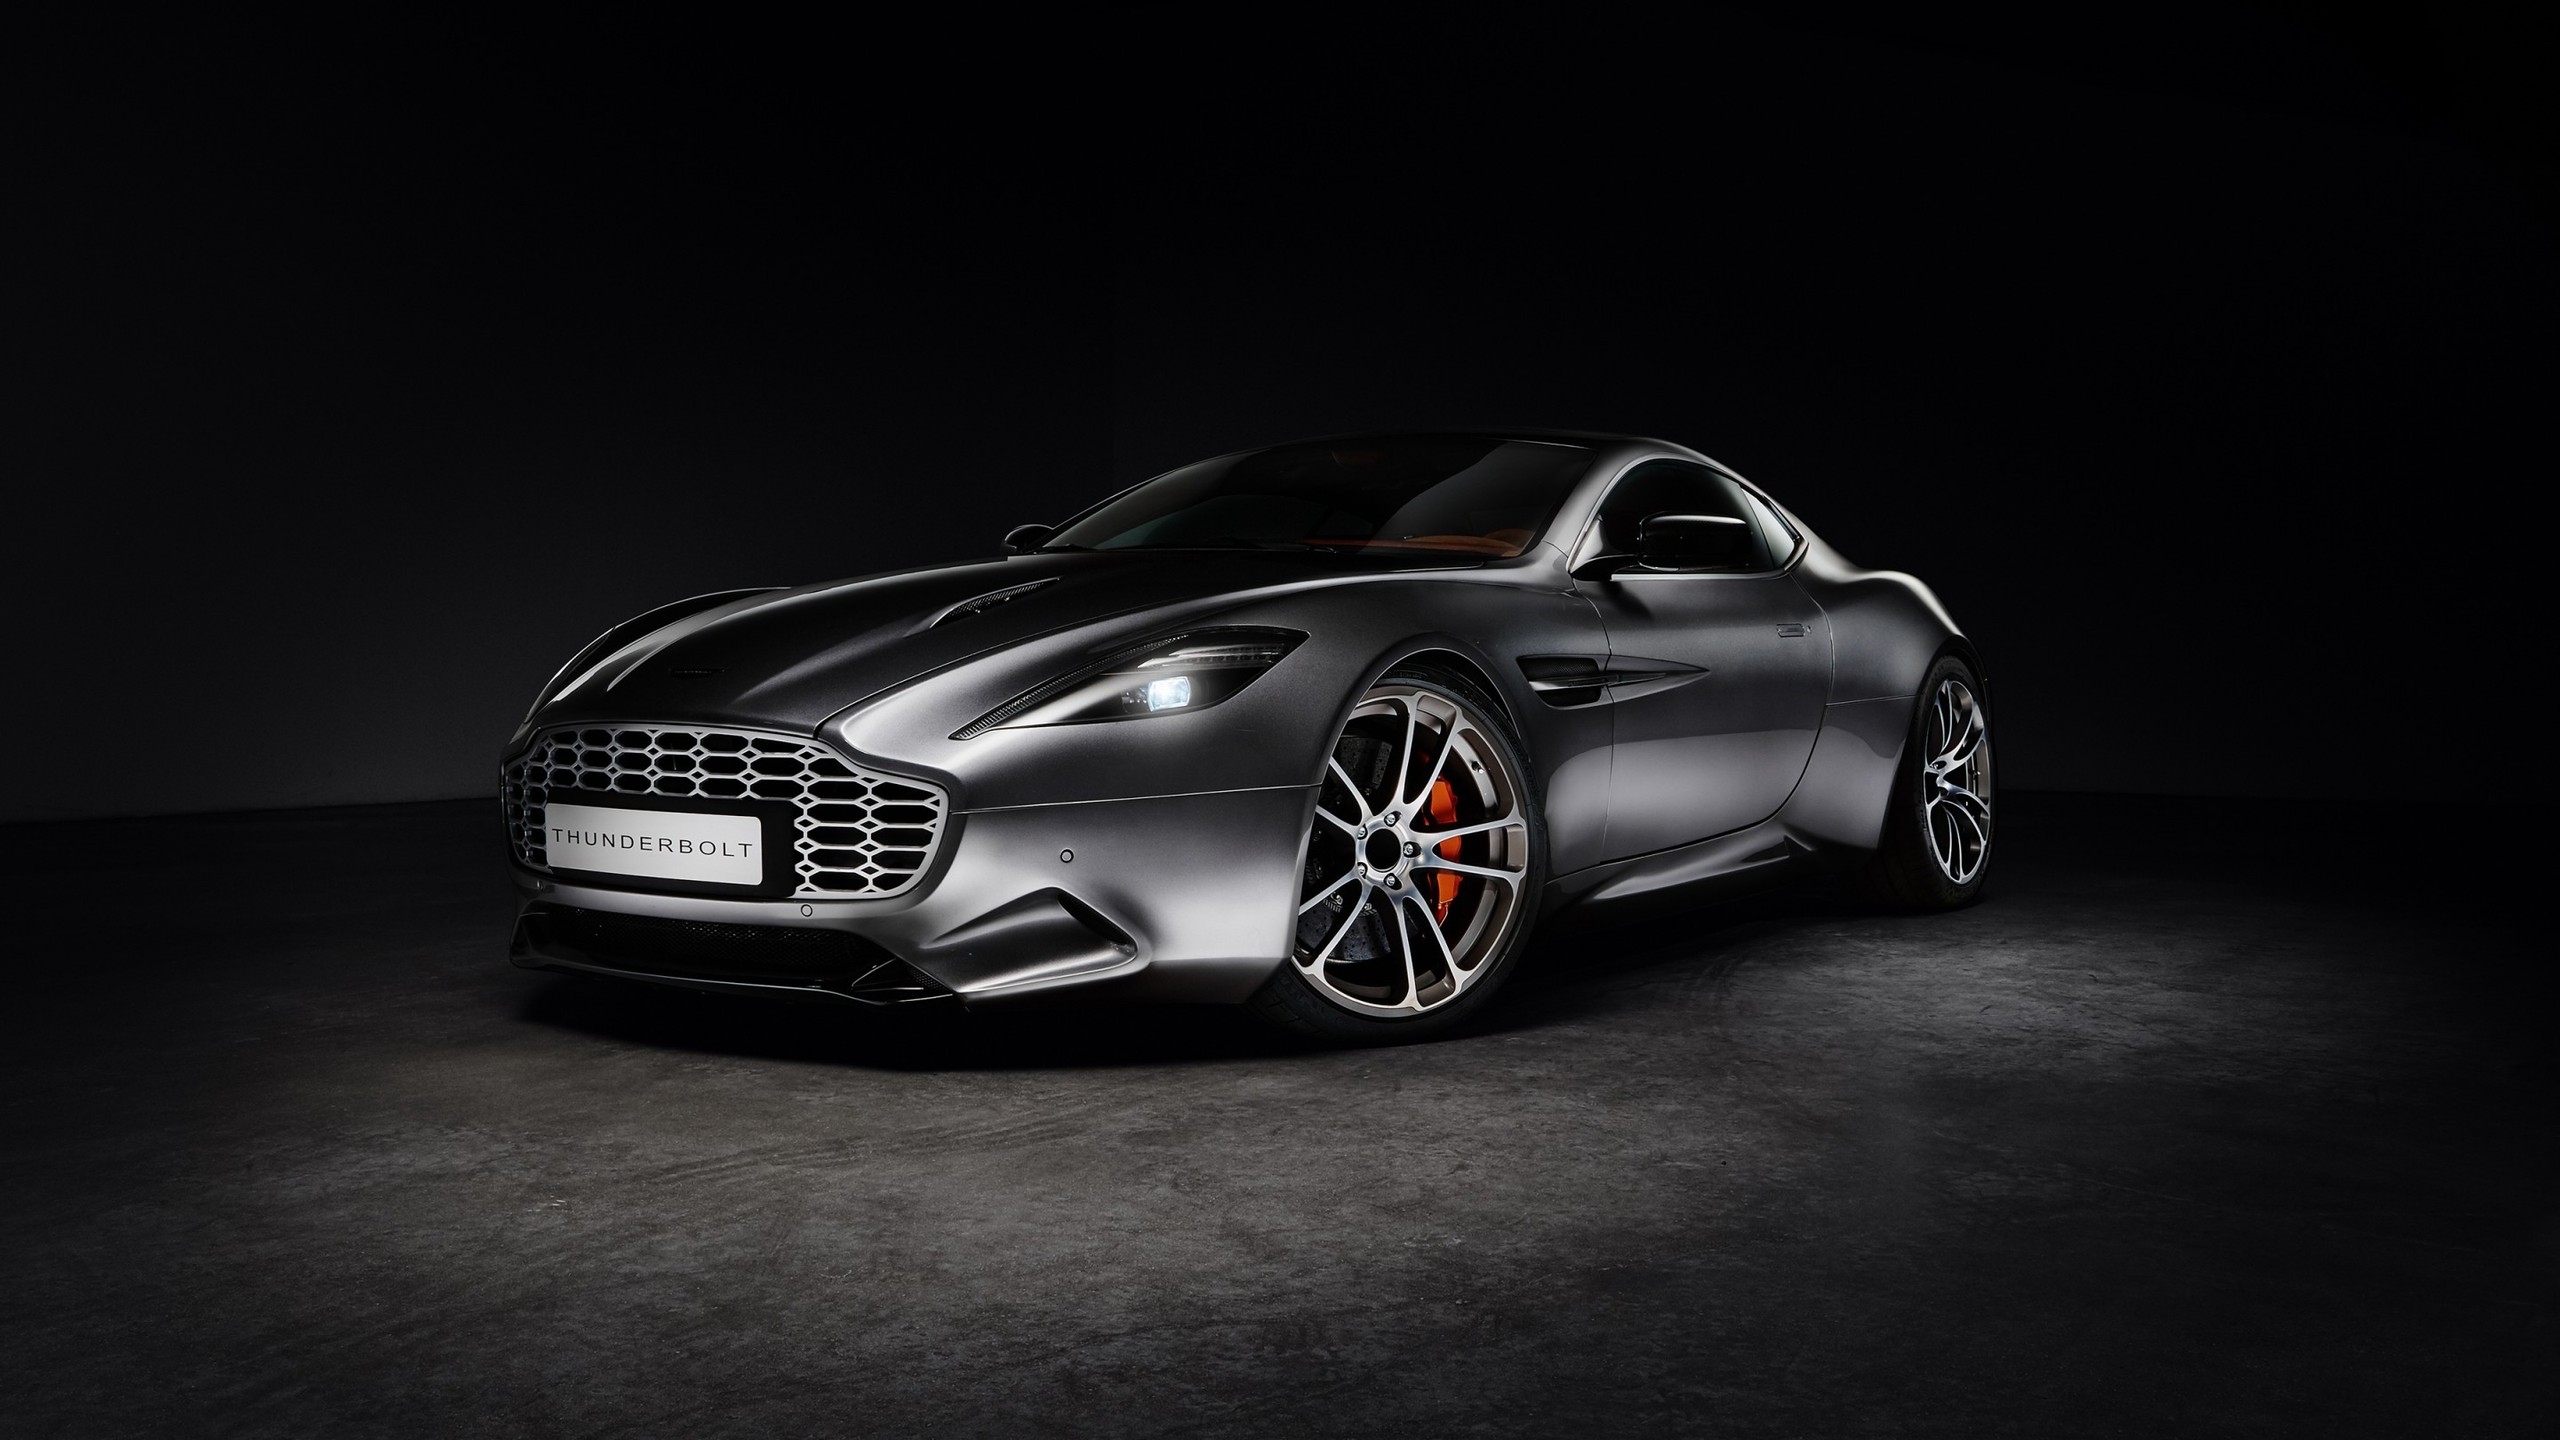 Aston Martin Thunderbolt for 2560x1440 HDTV resolution